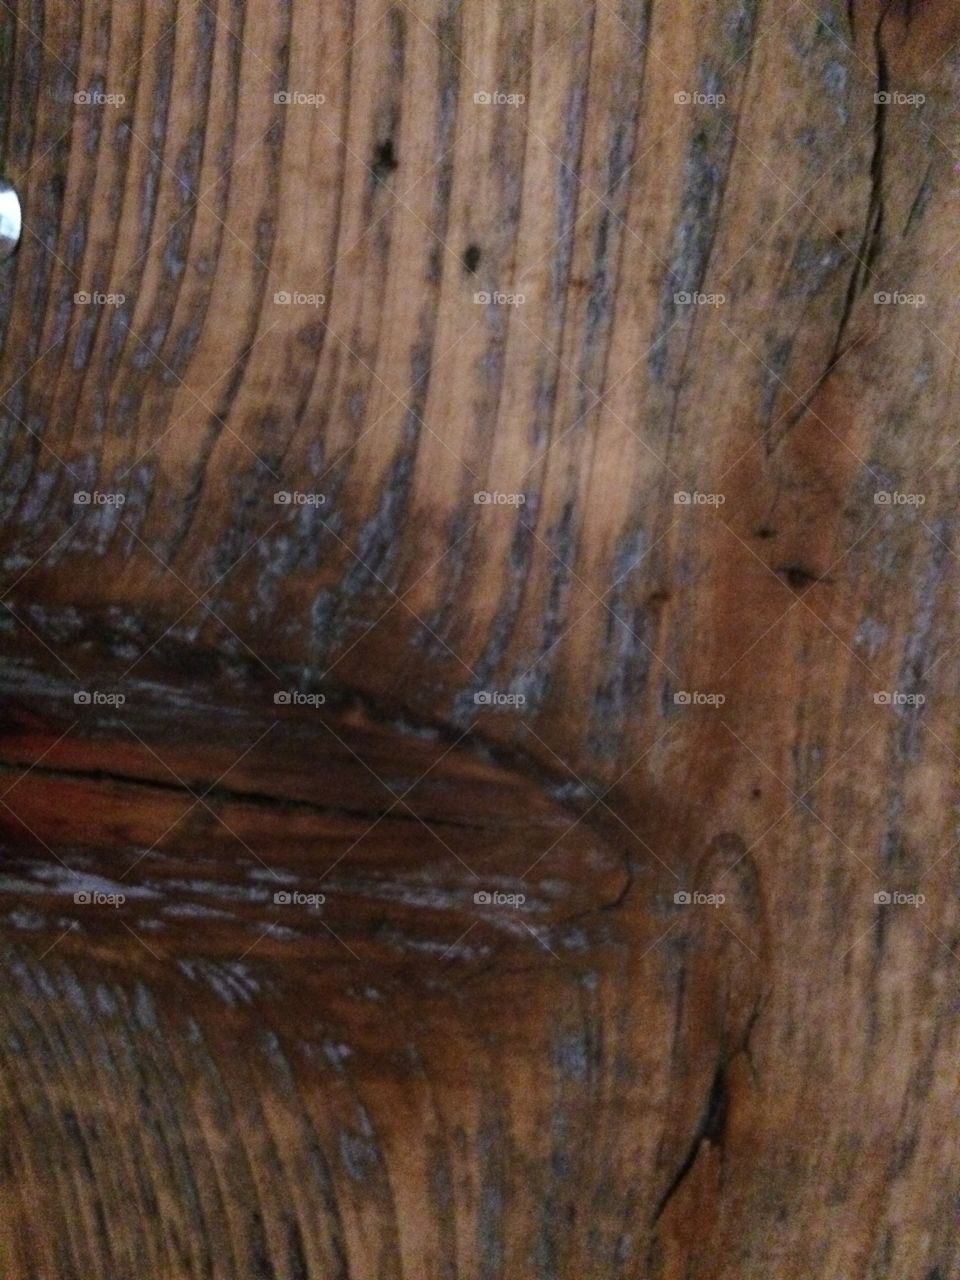 Wood, Log, Texture, Tree, Wooden